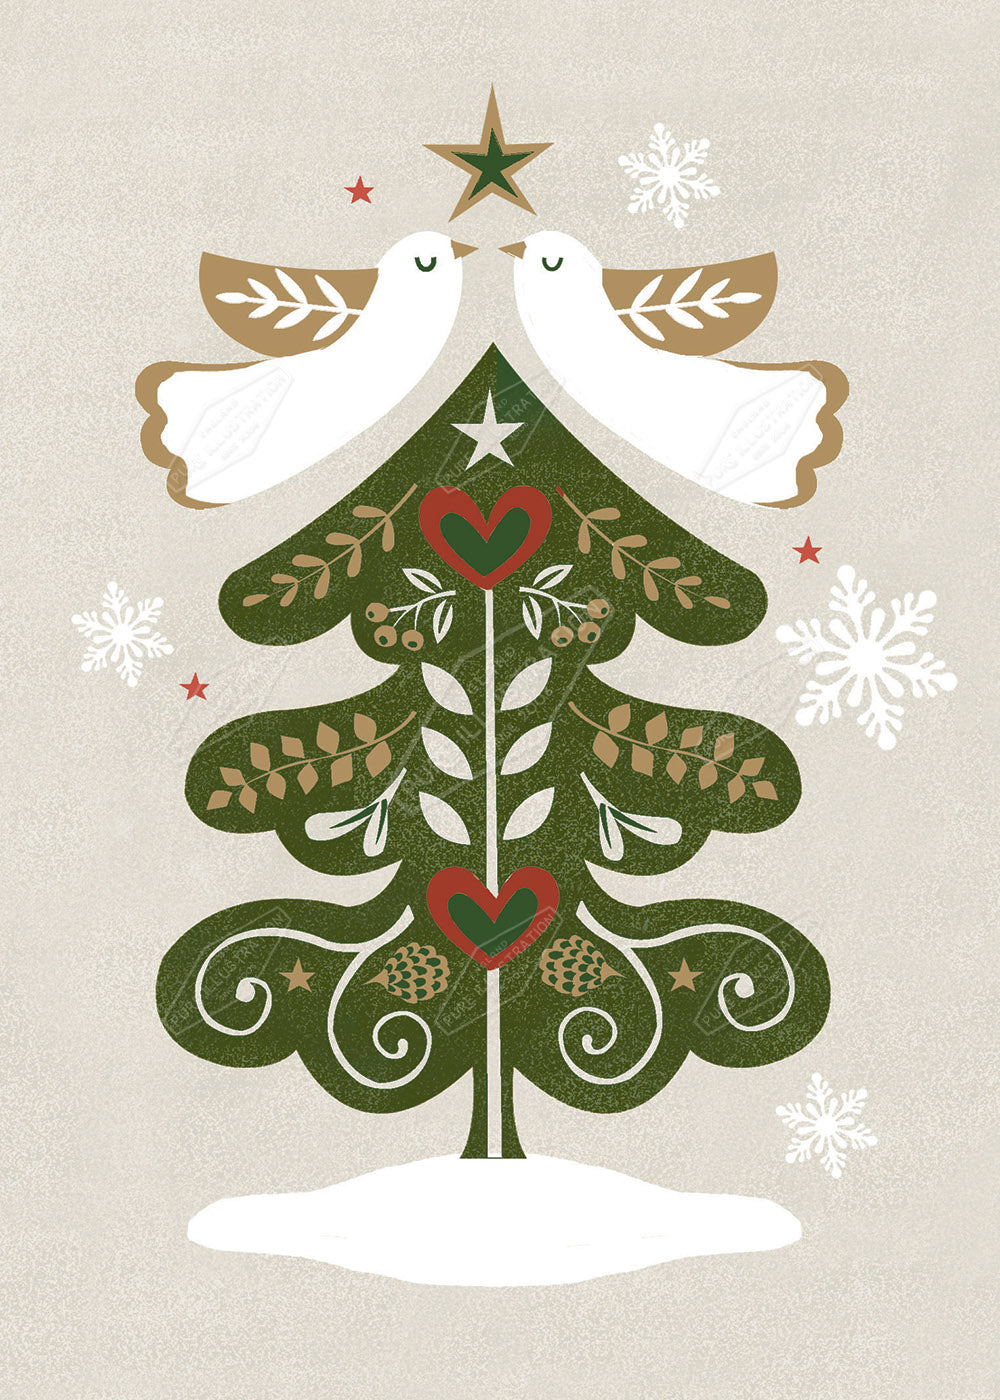 00028445DEV - Deva Evans is represented by Pure Art Licensing Agency - Christmas Greeting Card Design